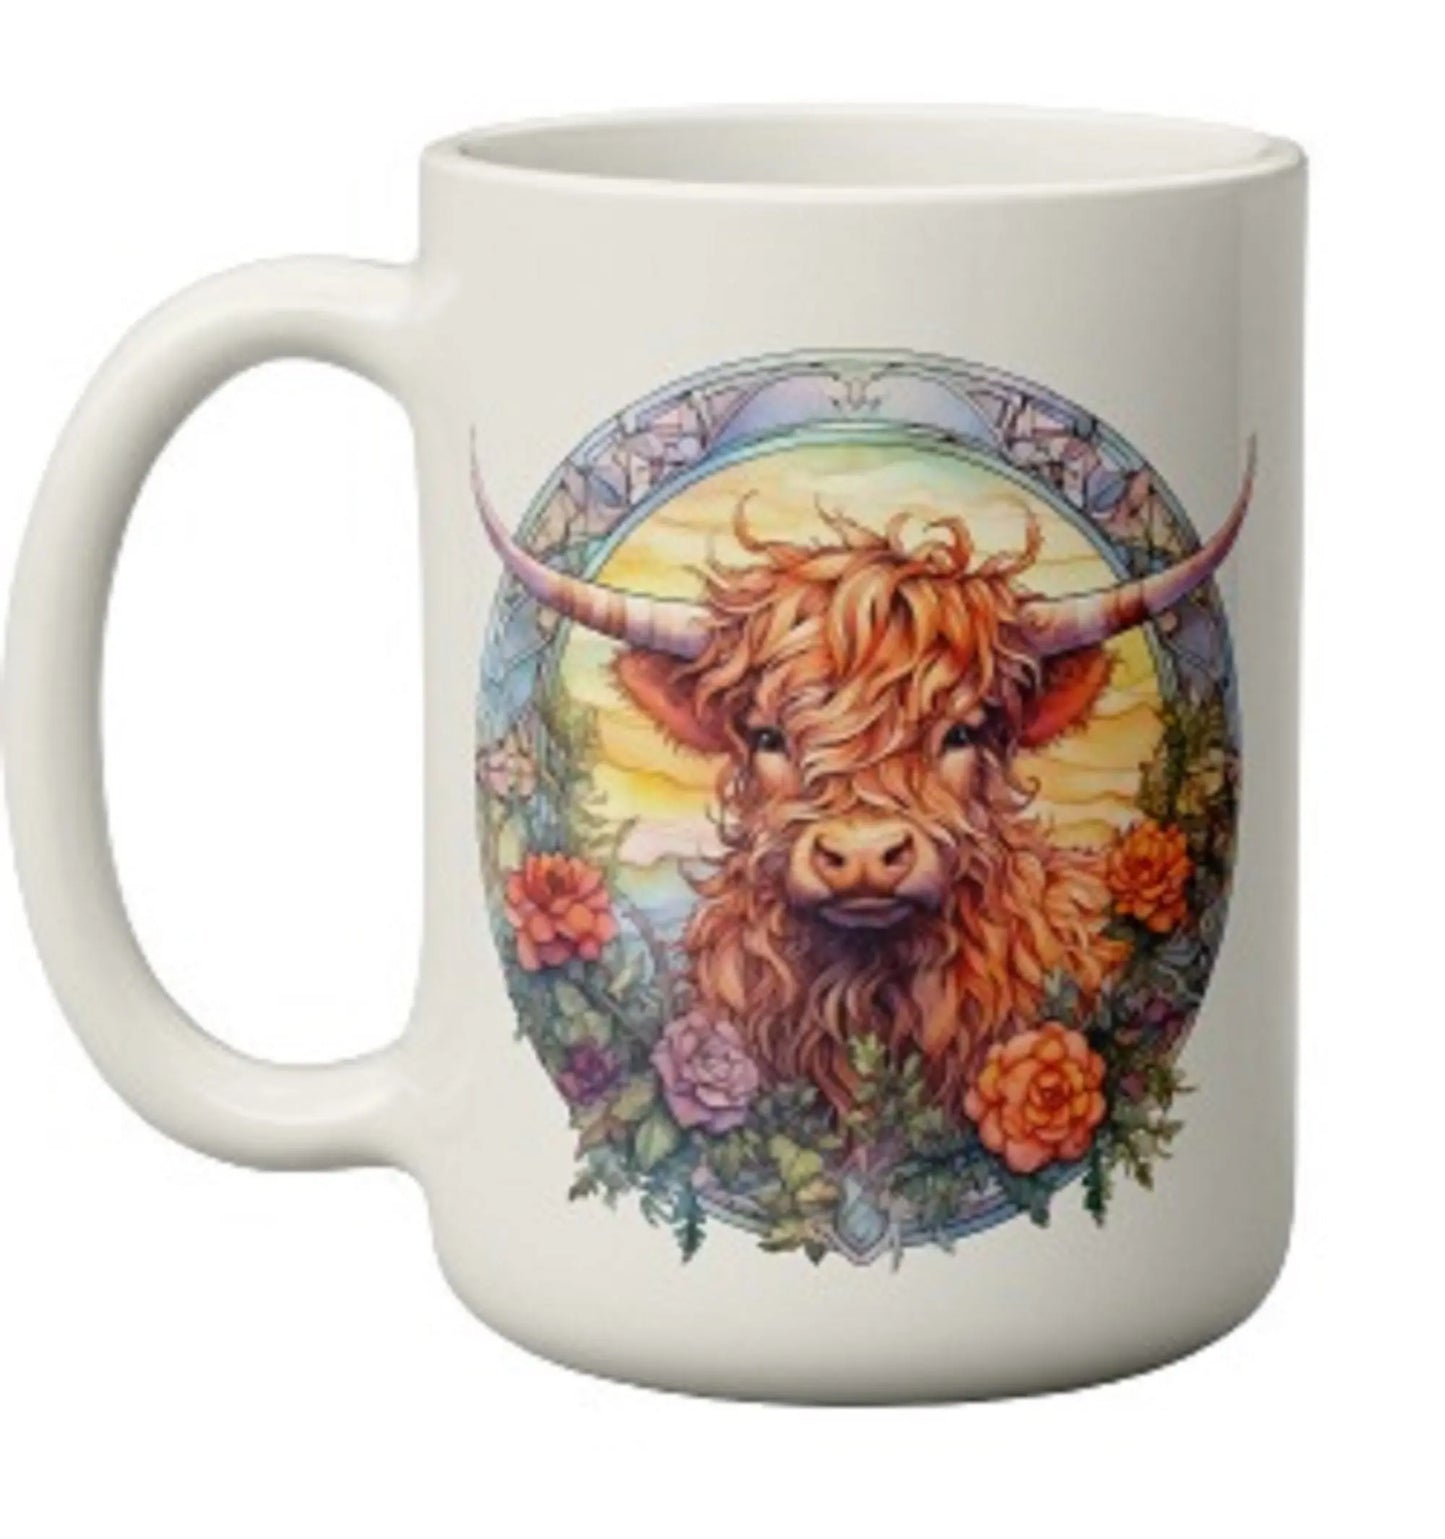  Highland Cow Stained Window Coffee Mug by Free Spirit Accessories sold by Free Spirit Accessories